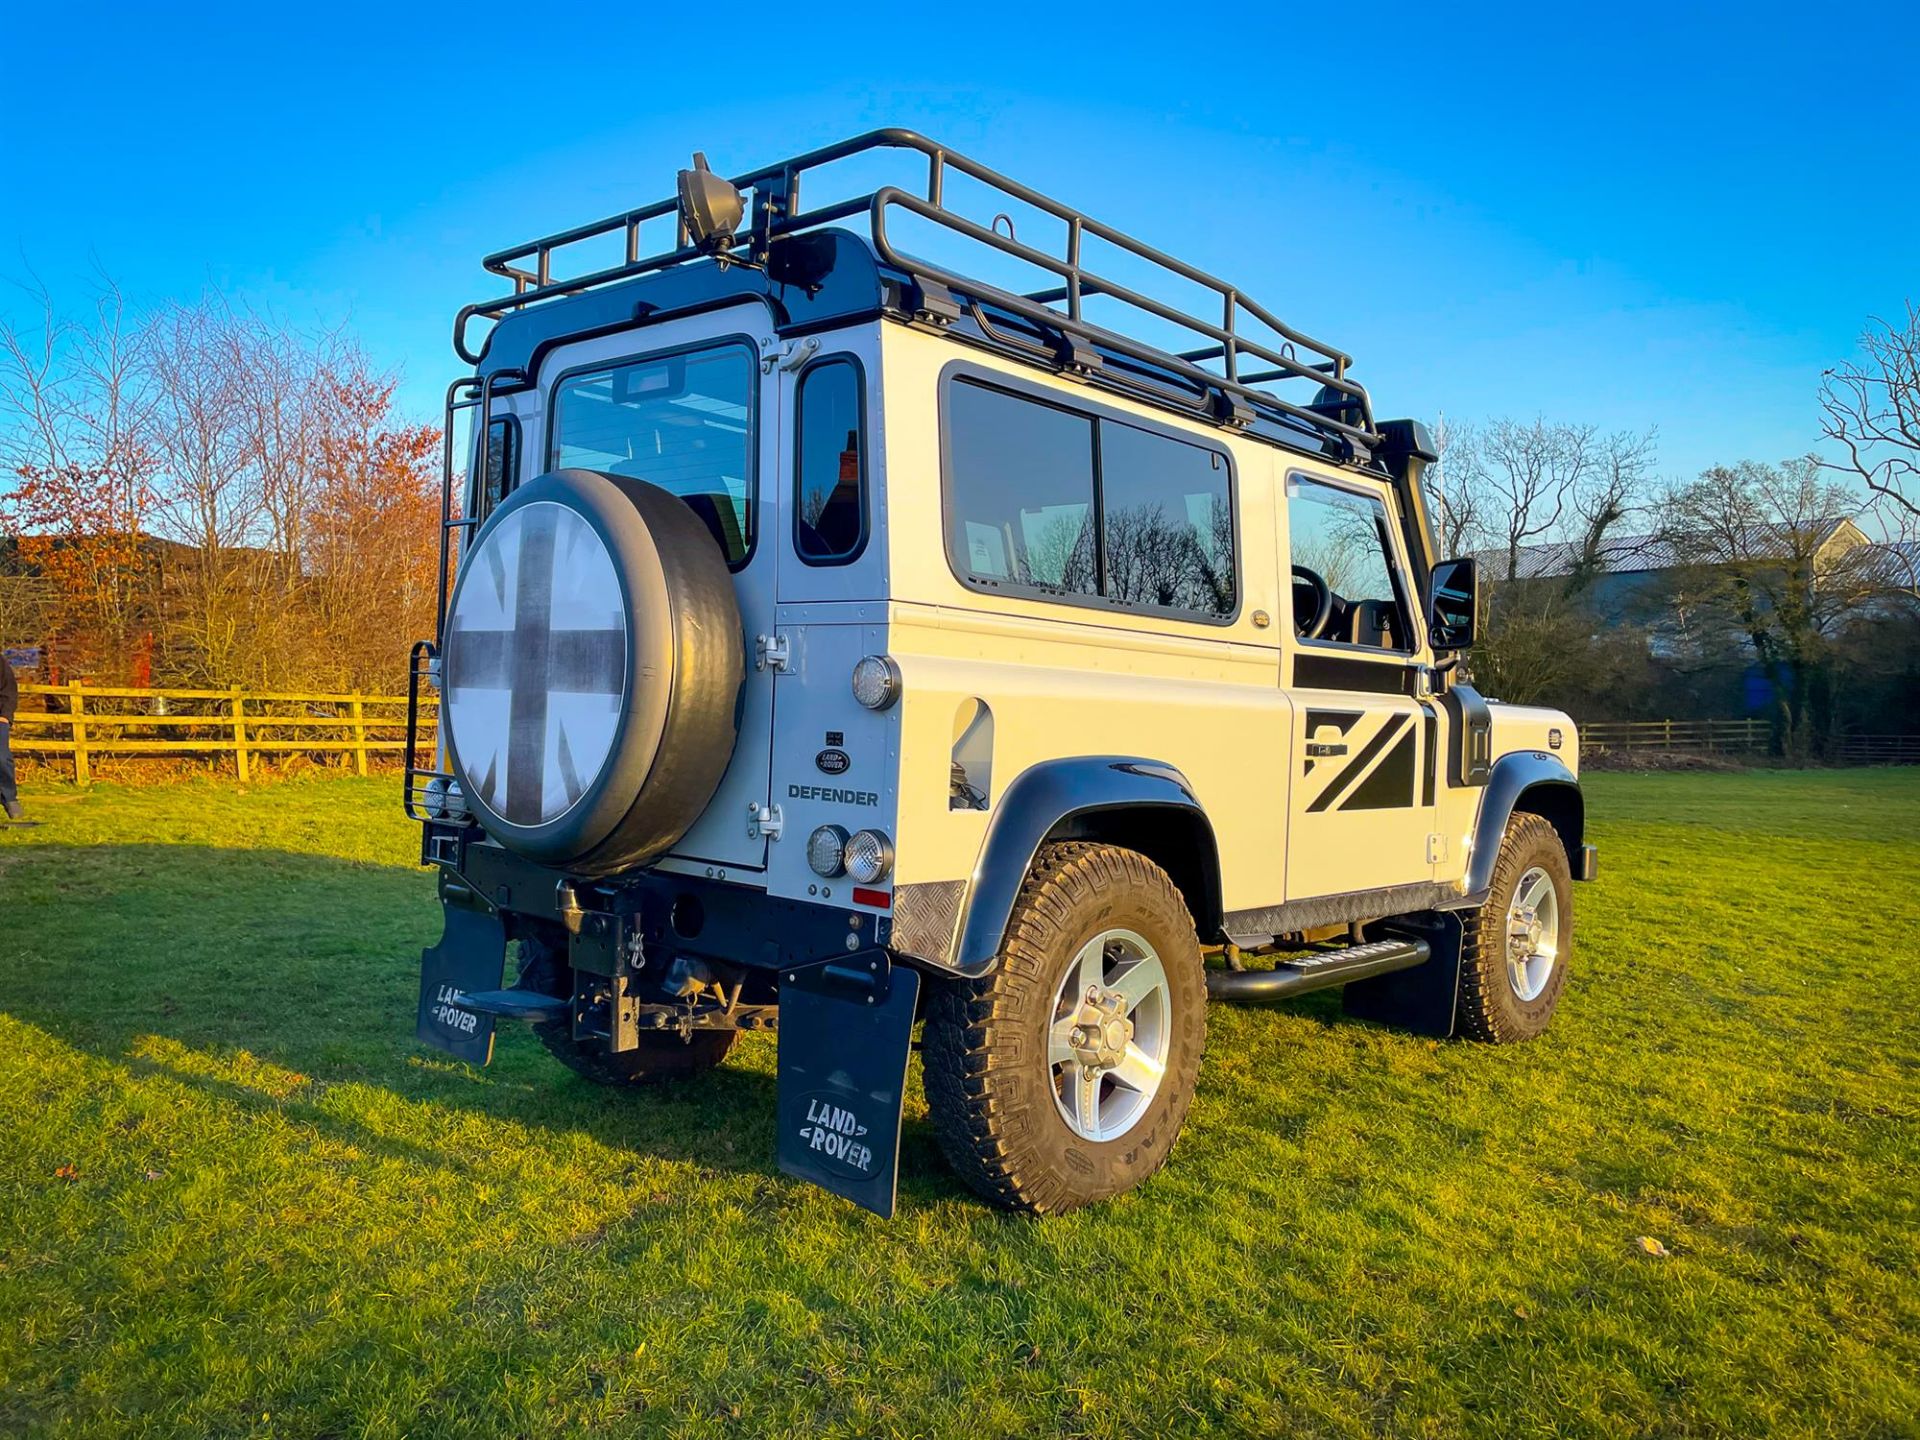 2015 Land Rover Defender 90 Landmark Edition - Image 9 of 10